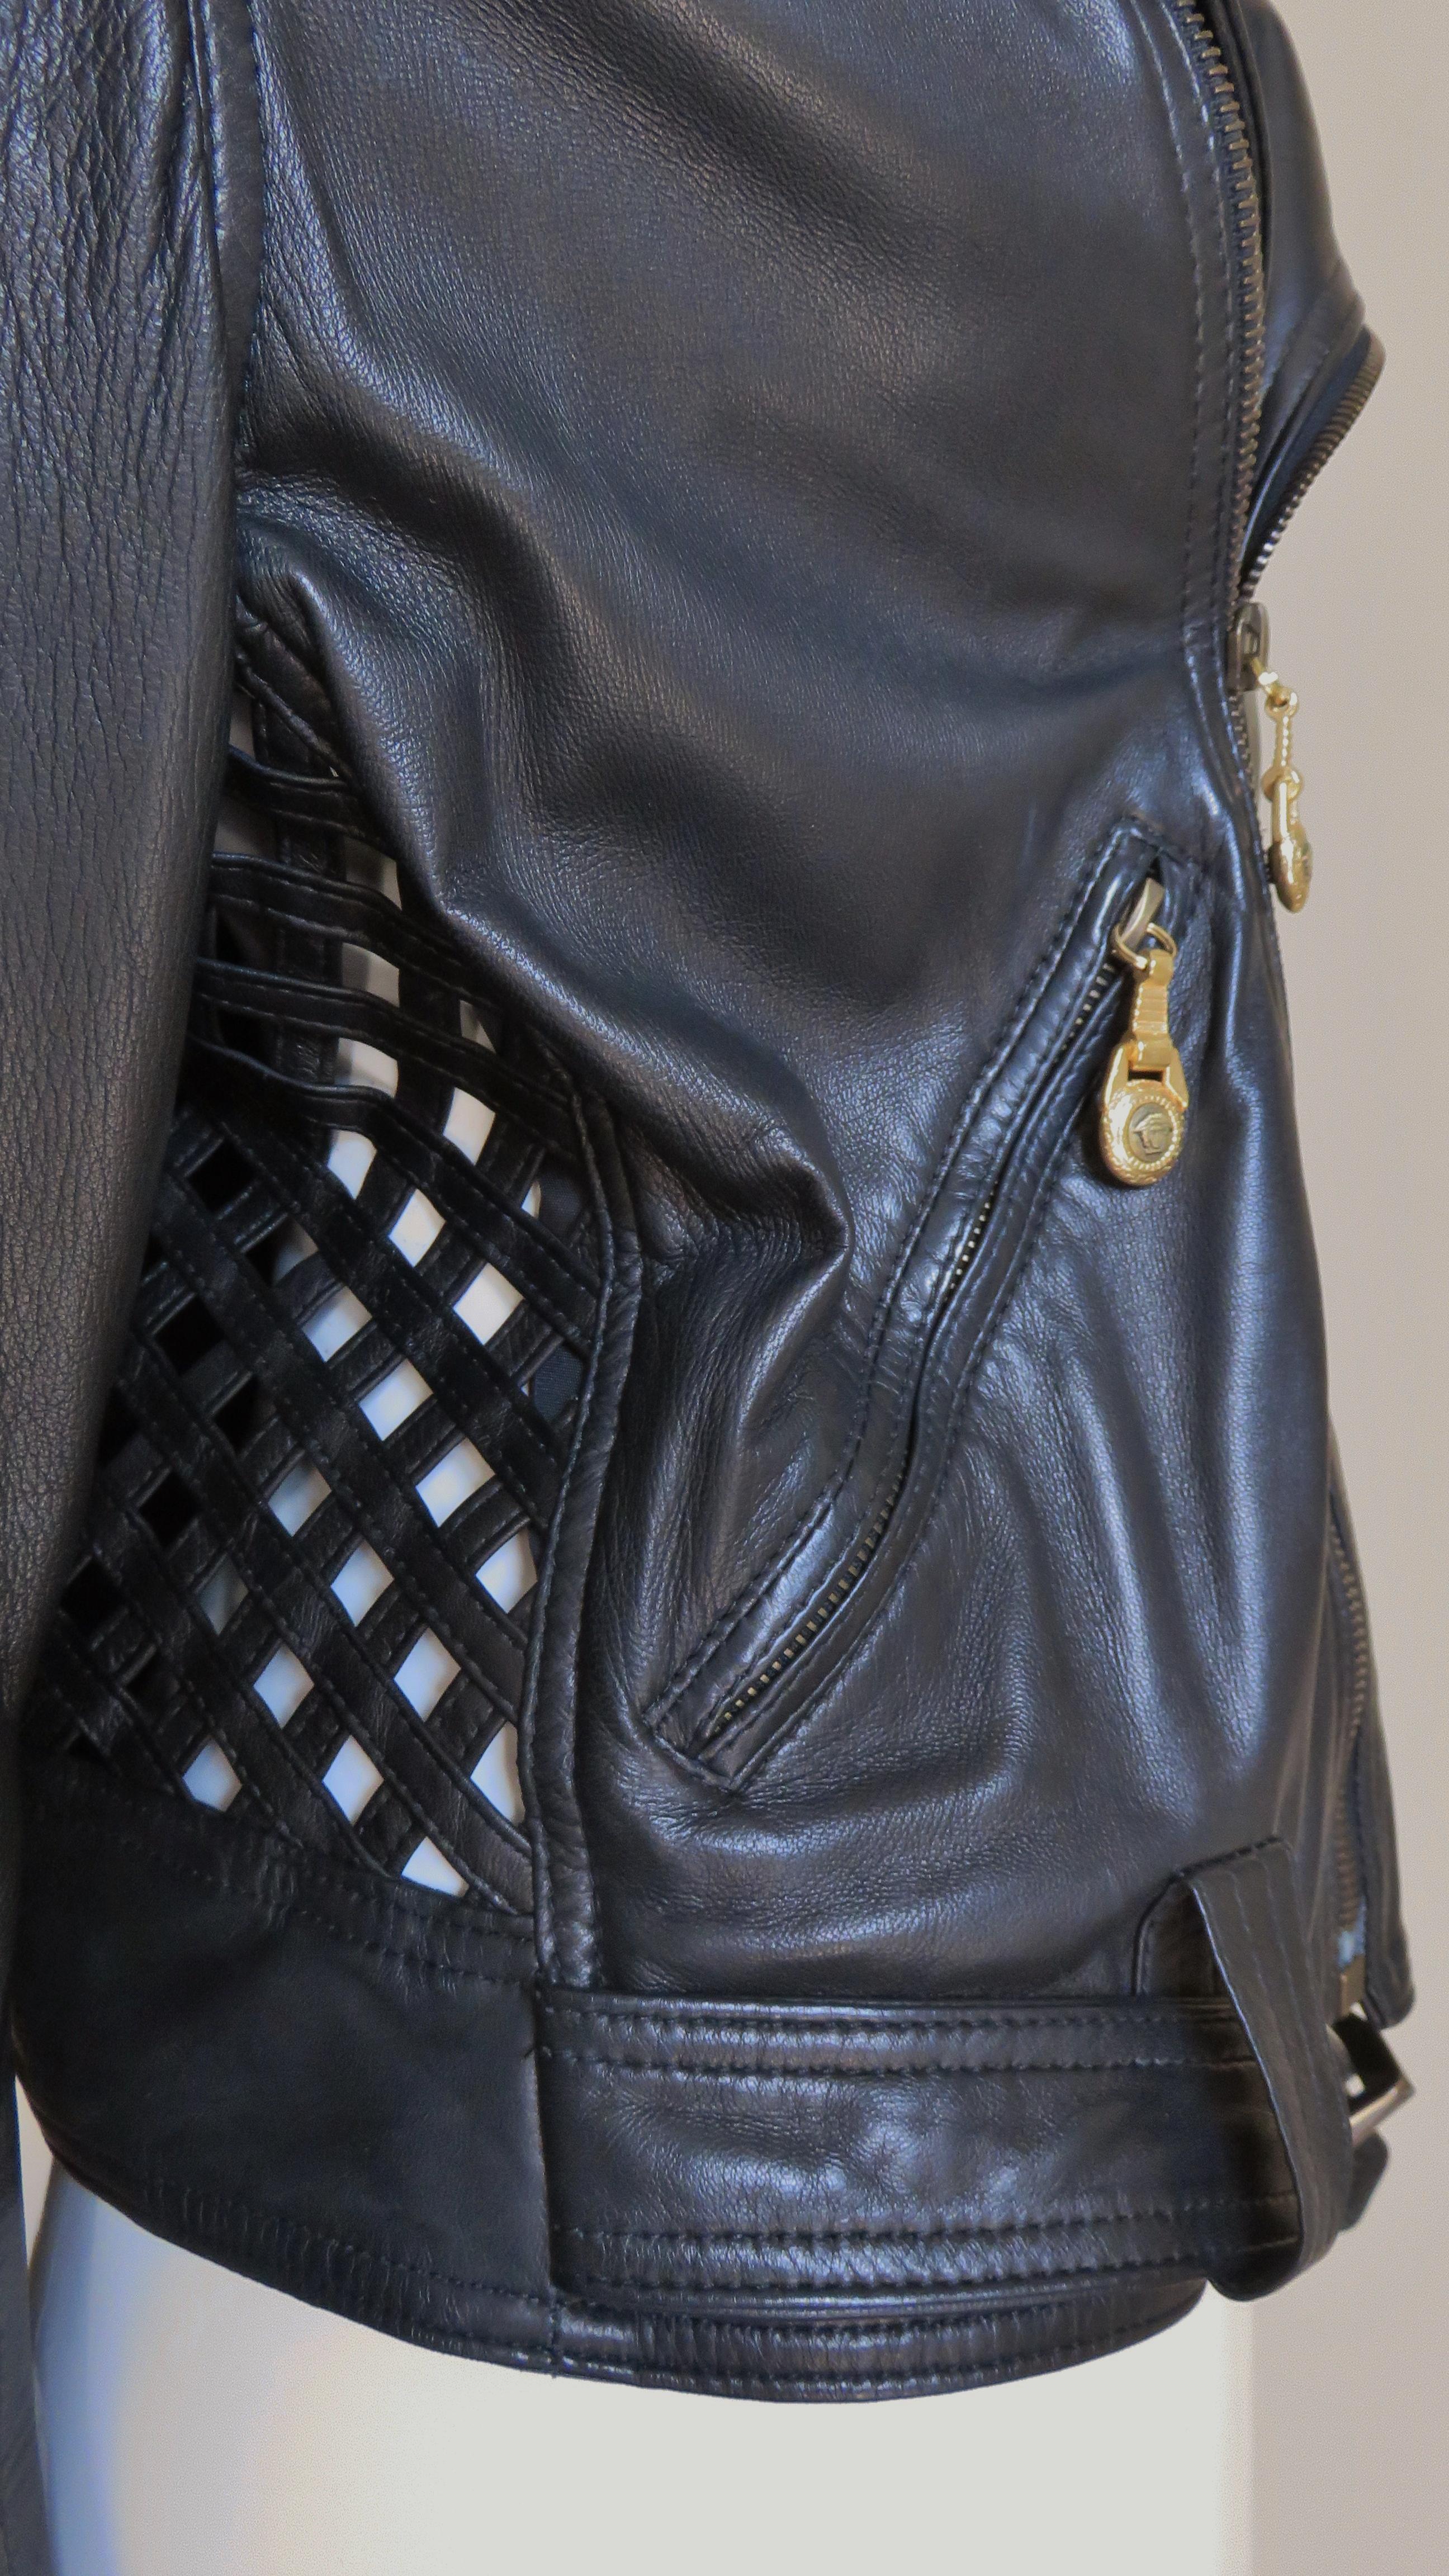 gianni versace leather jacket